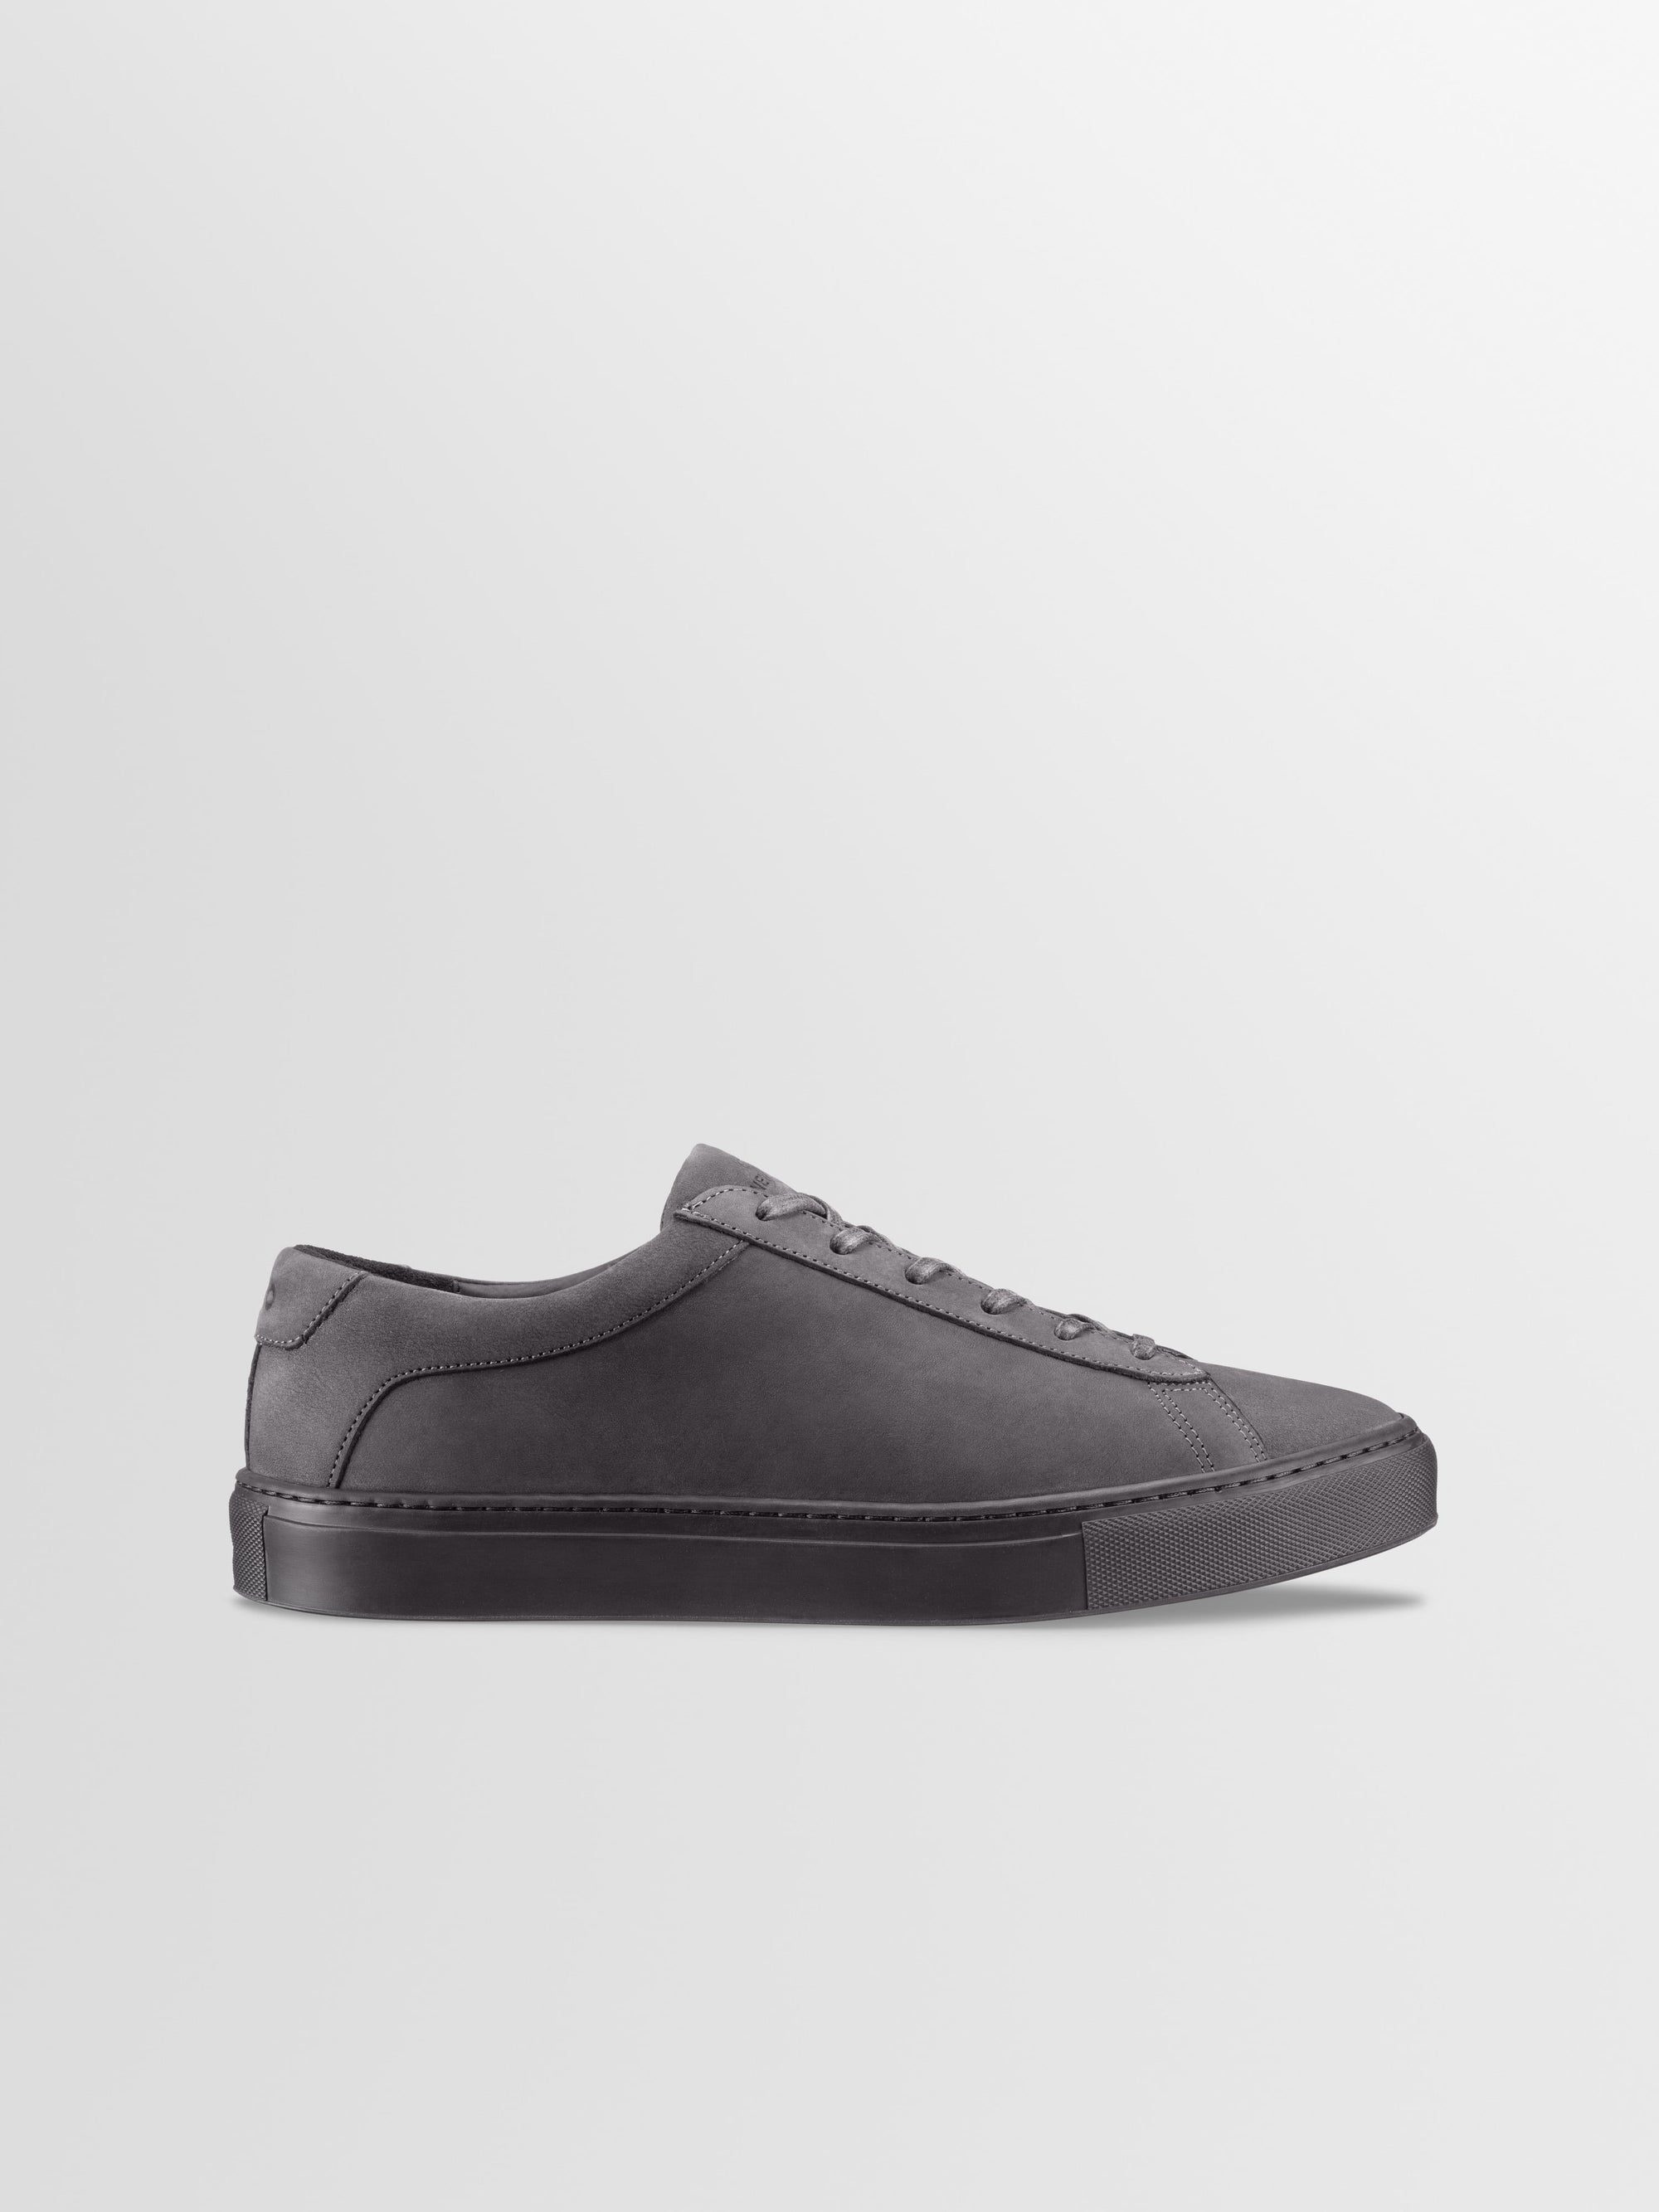 KOIO Capri Sneakers Gray Charcoal Suede Men's Low Top Size EU 42